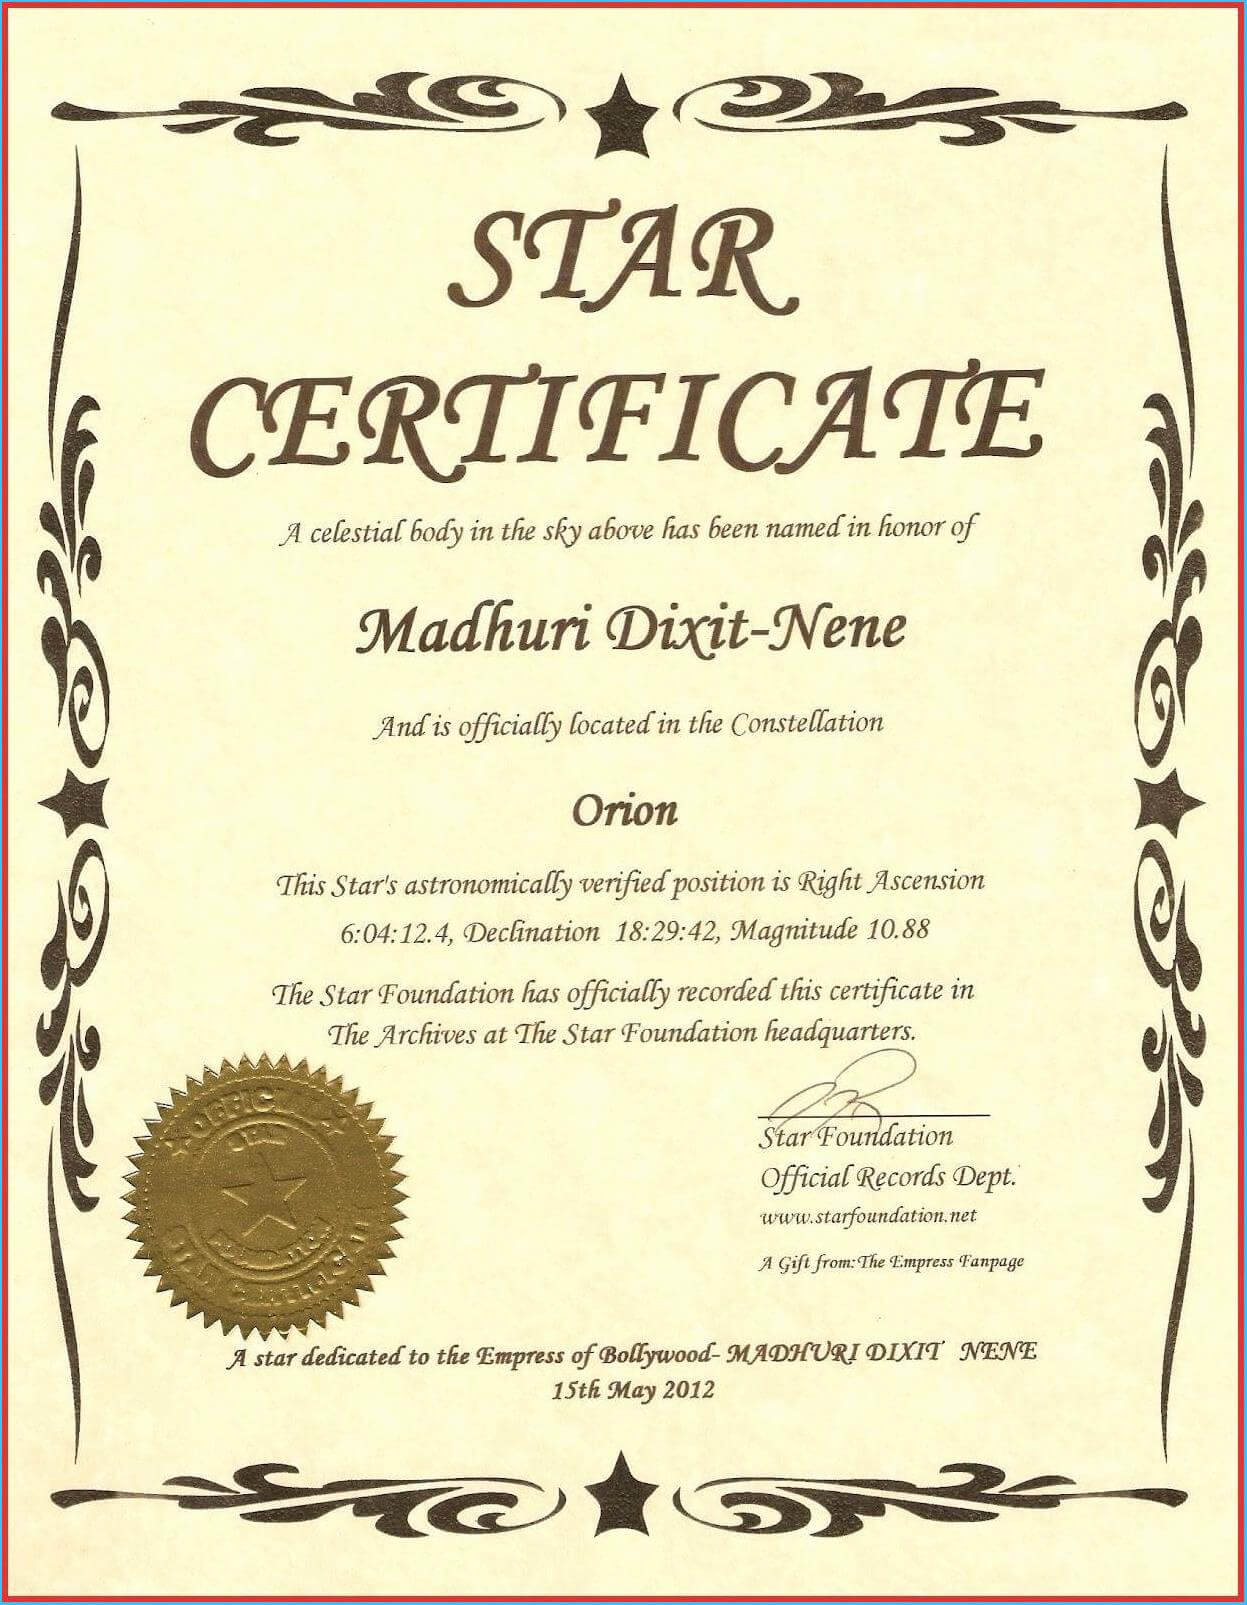 Star Certificate Templates Free – Zimer.bwong.co For Star Certificate Templates Free